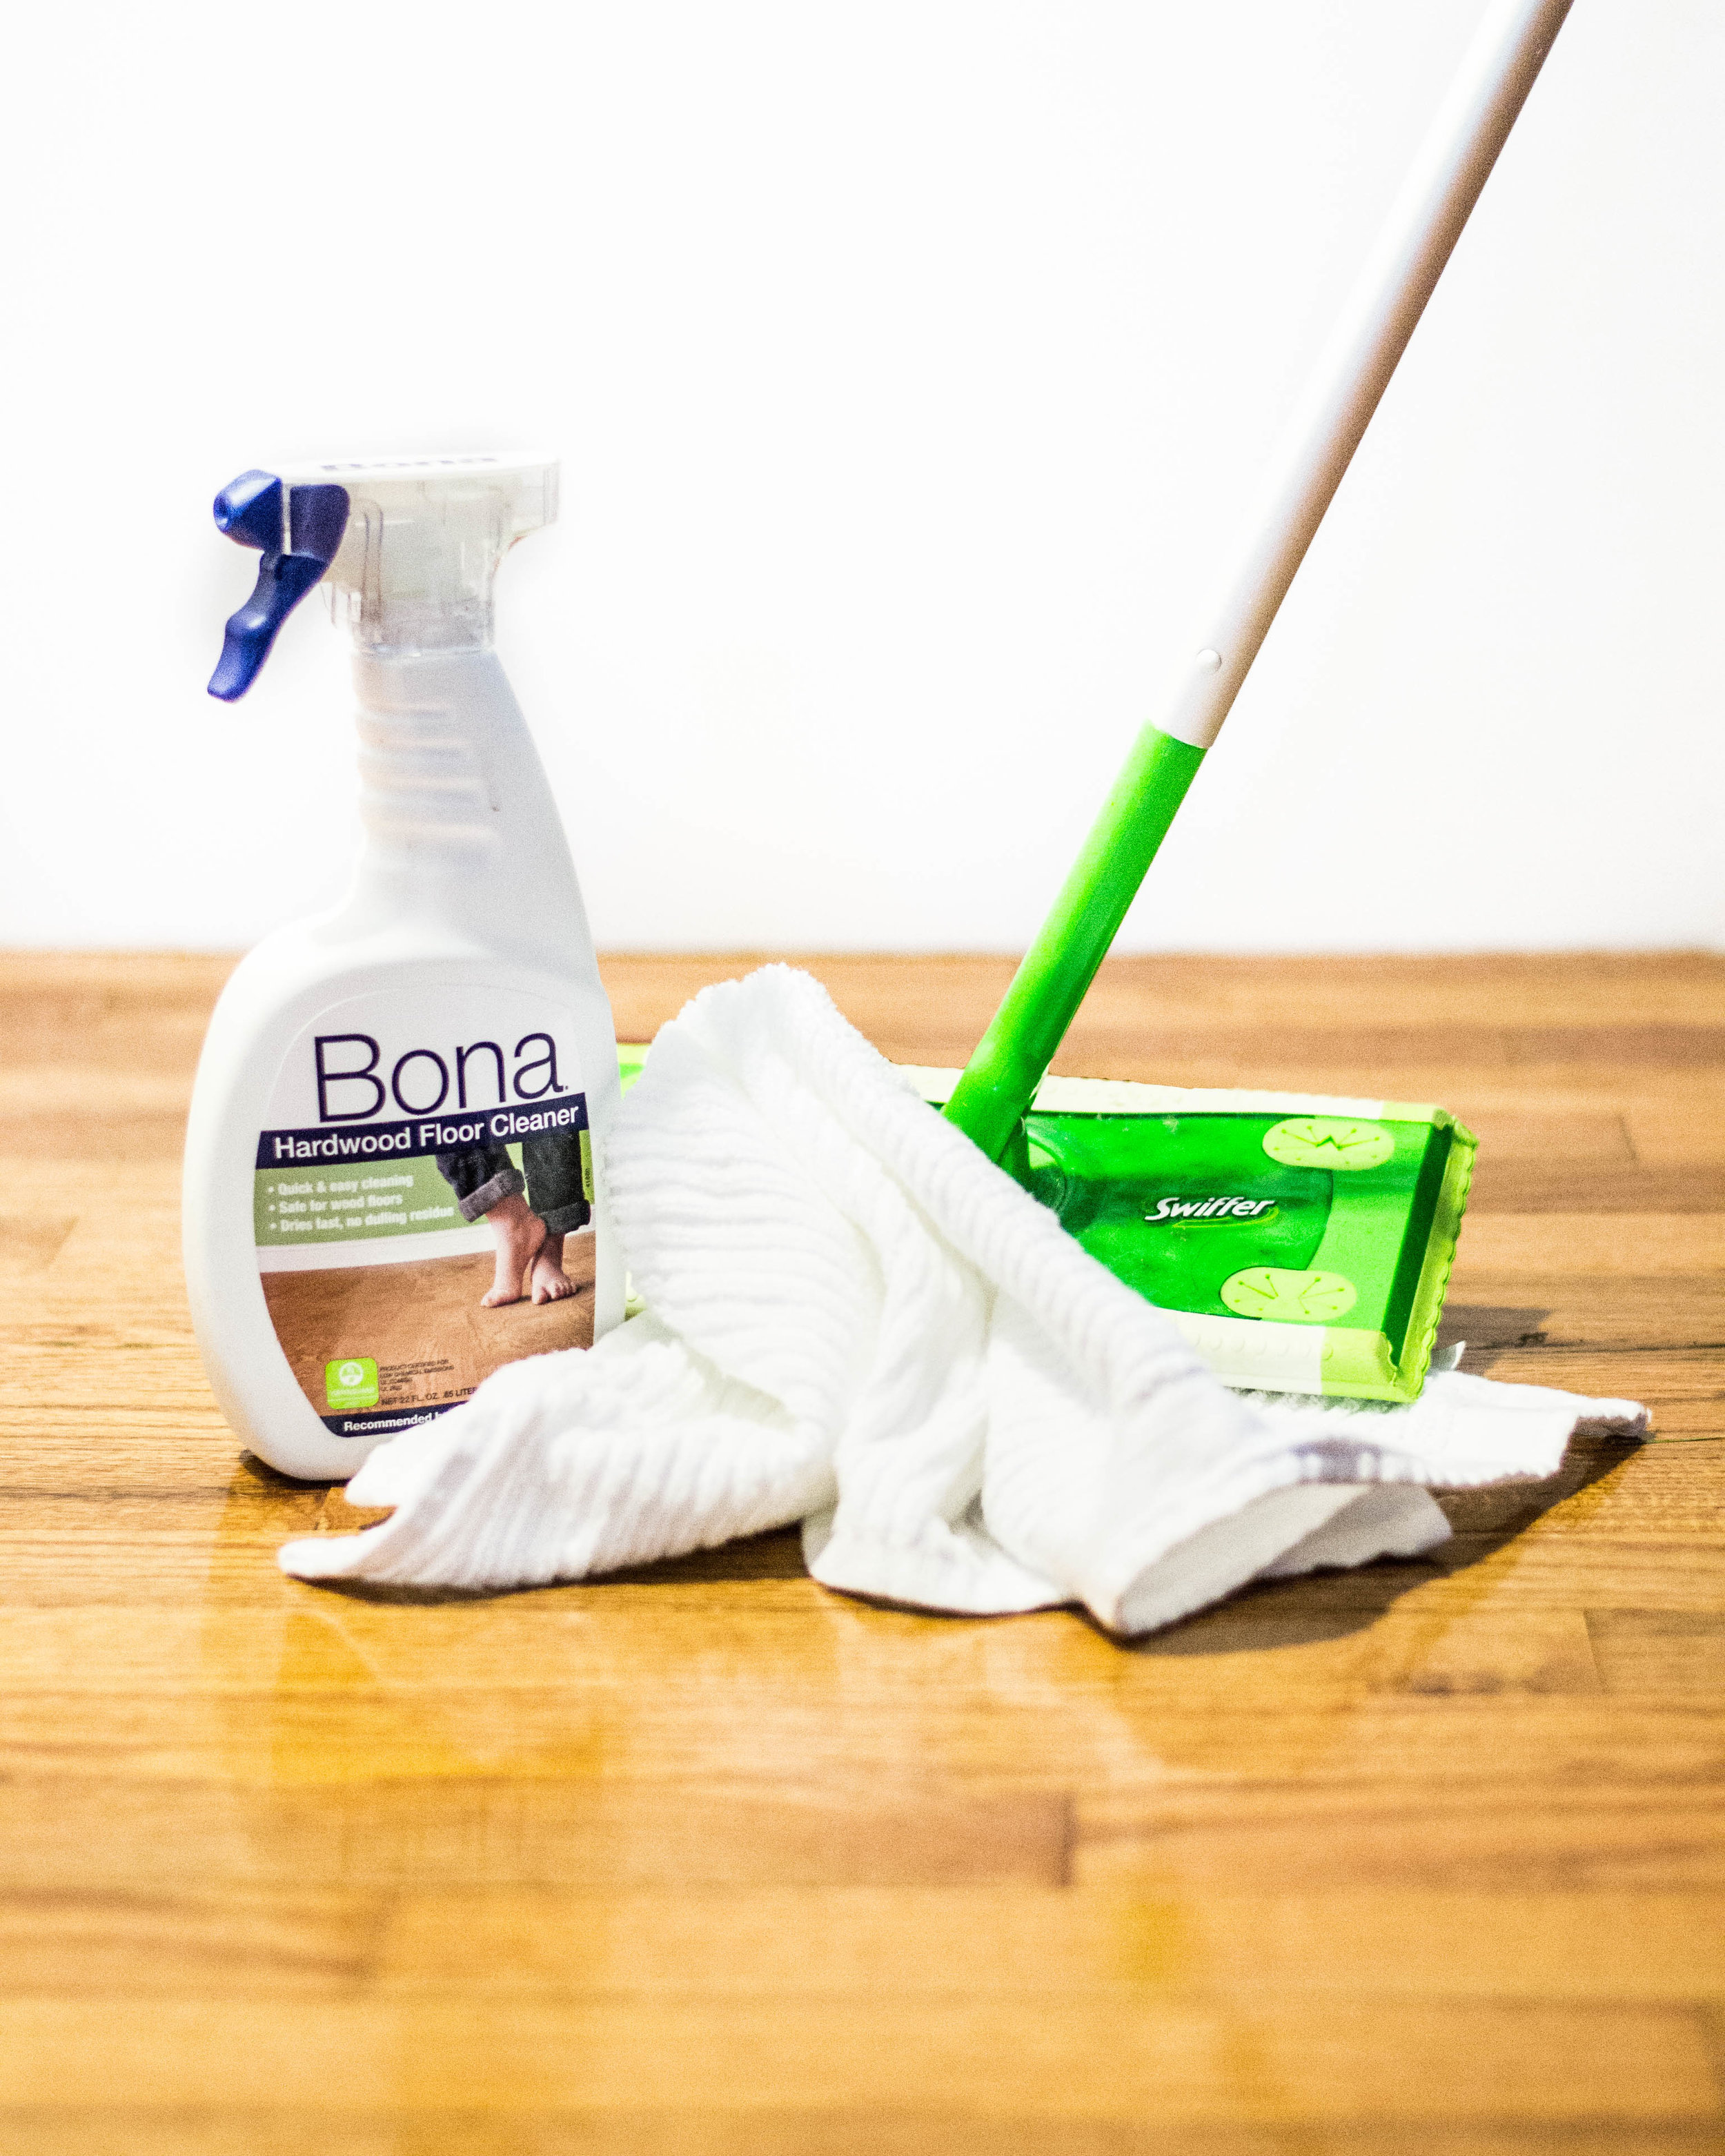 How to clean hardwood floor || Bona Hardwood Floor Cleaner & Swiffer Sweeper || by Hayley Fiser || thehayleyfiser.com